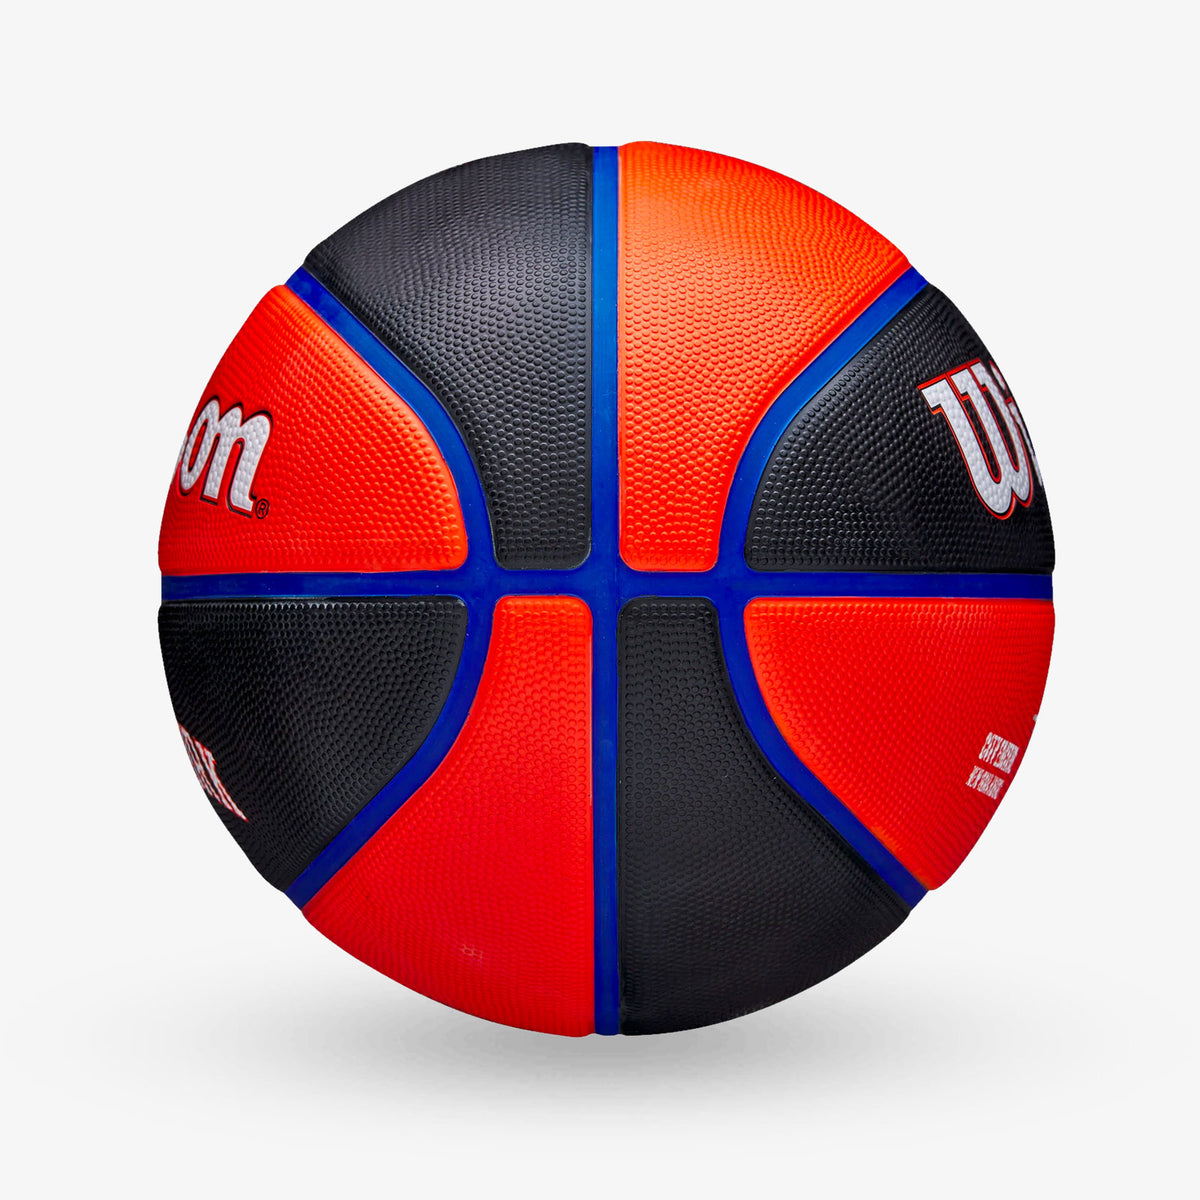 New York Knicks City Edition Mixtape NBA Basketball - Size 7